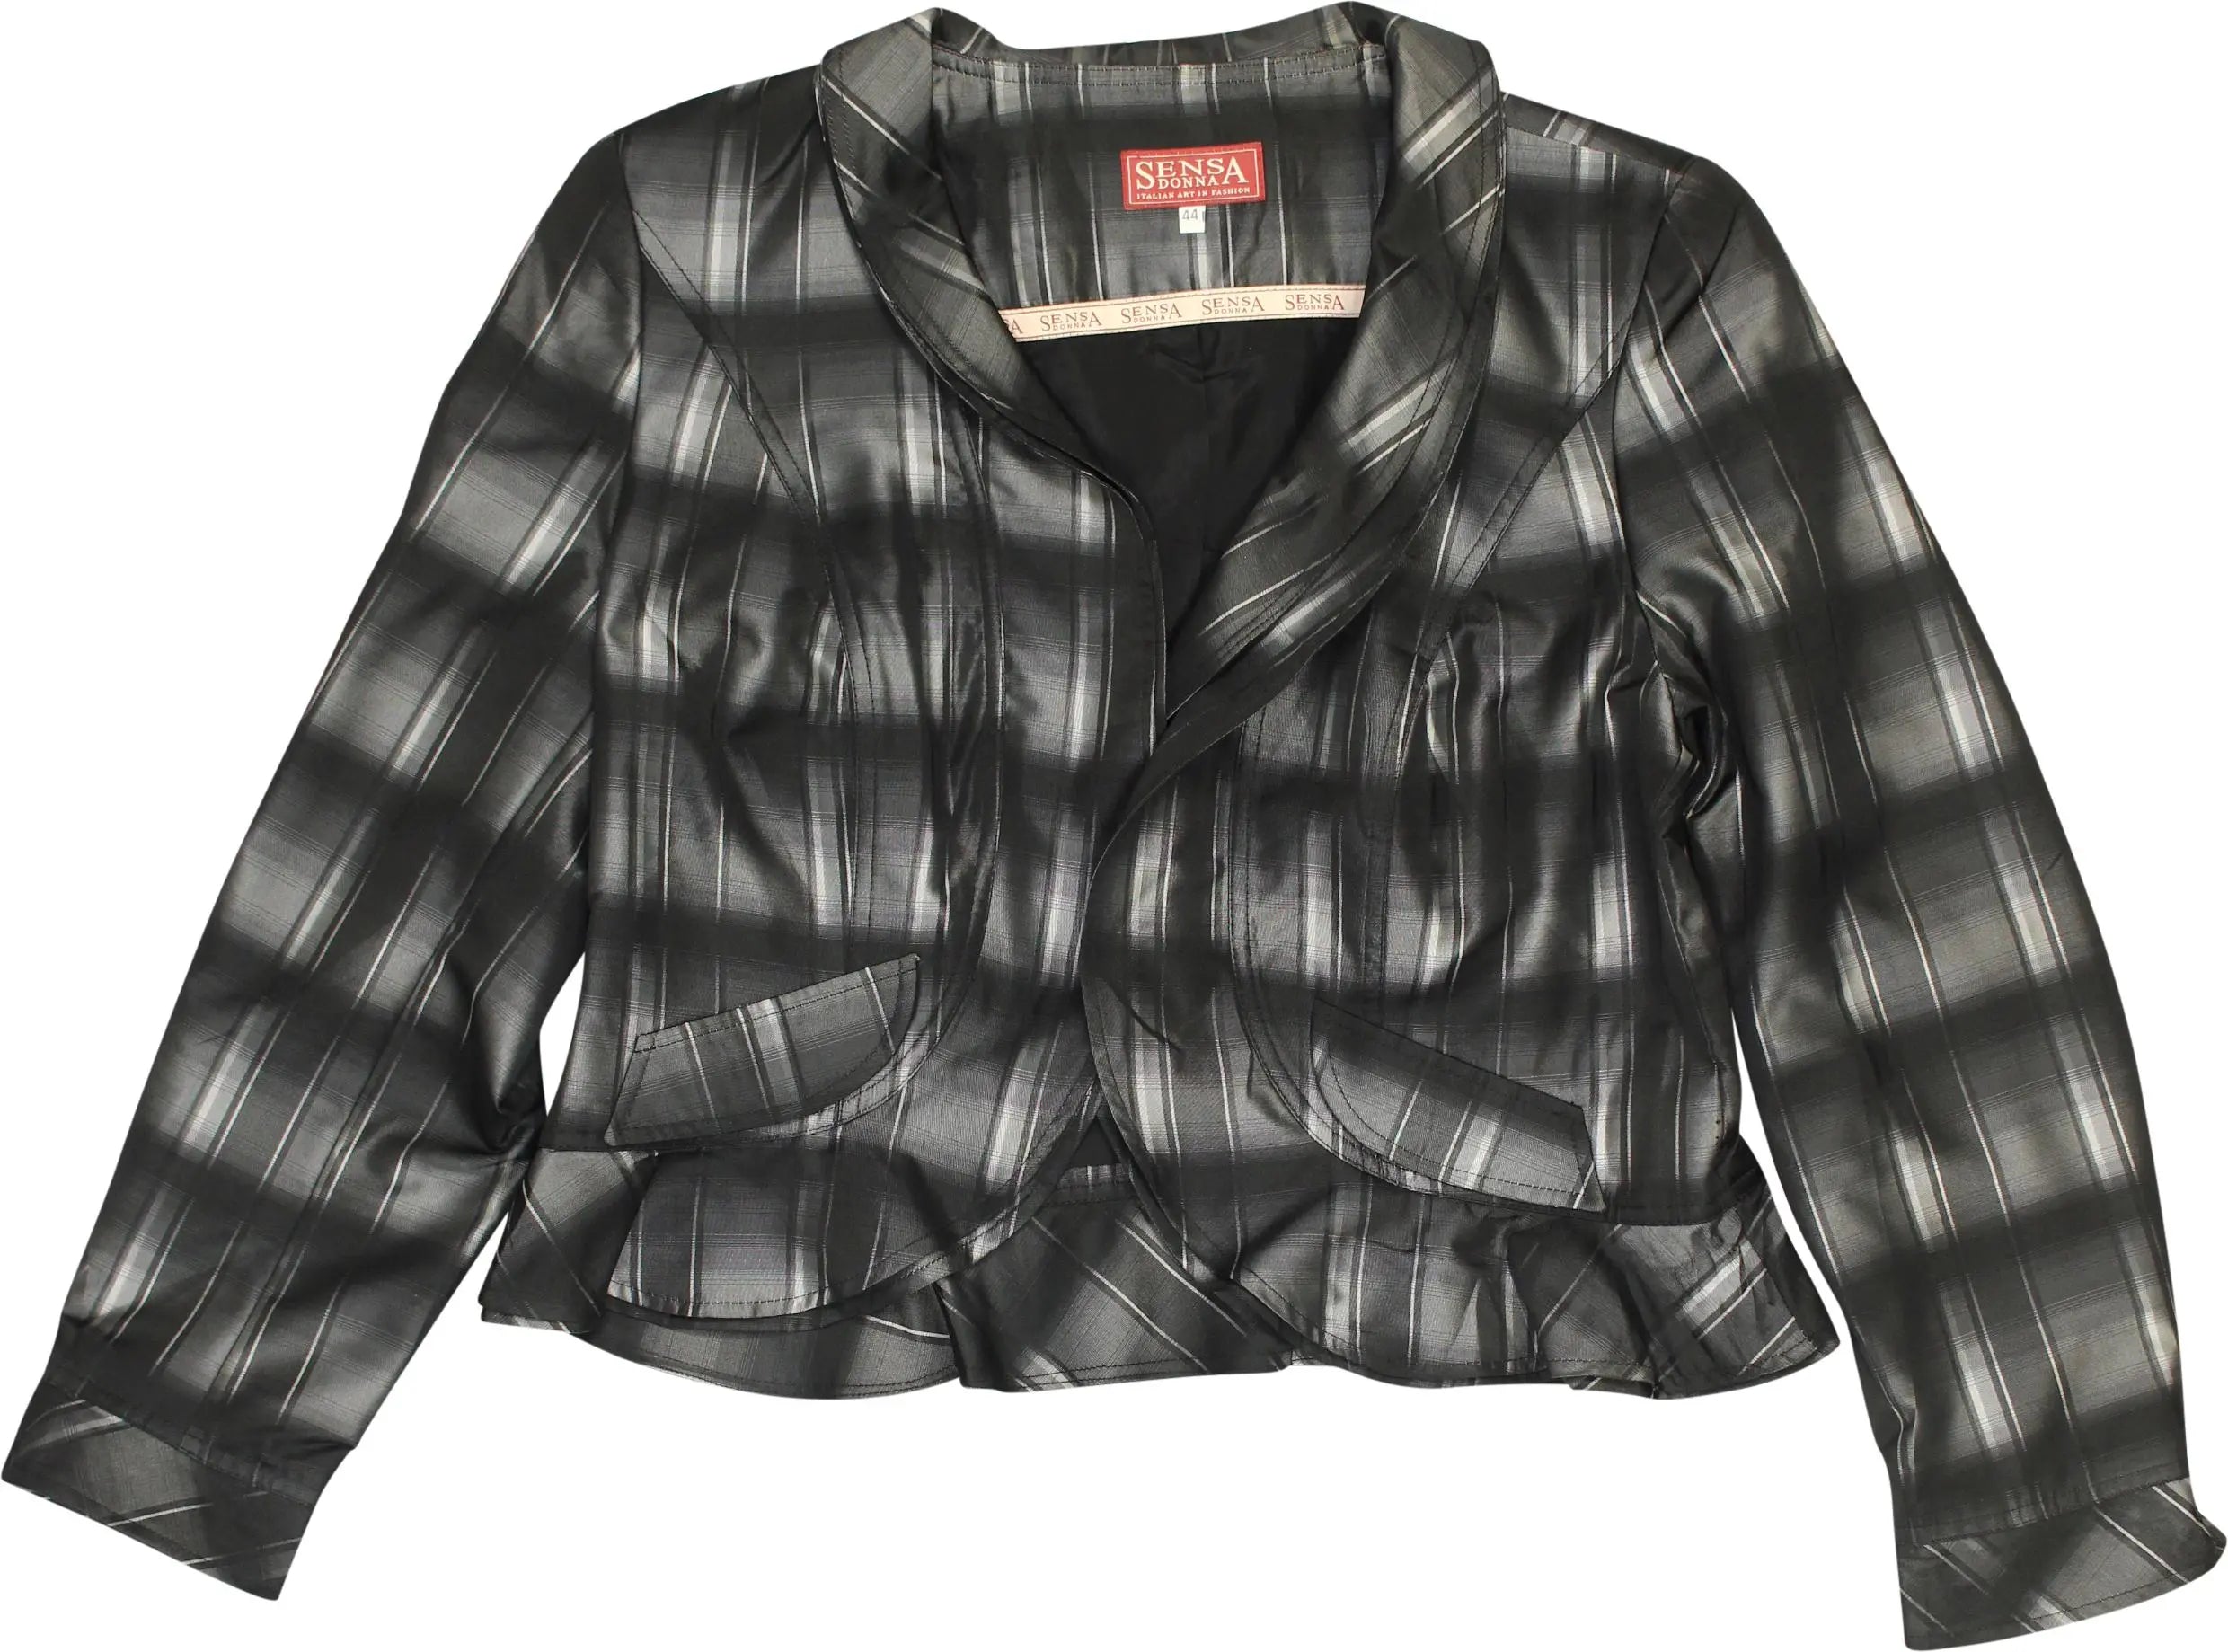 Sensa Donna - Plaid Jacket- ThriftTale.com - Vintage and second handclothing